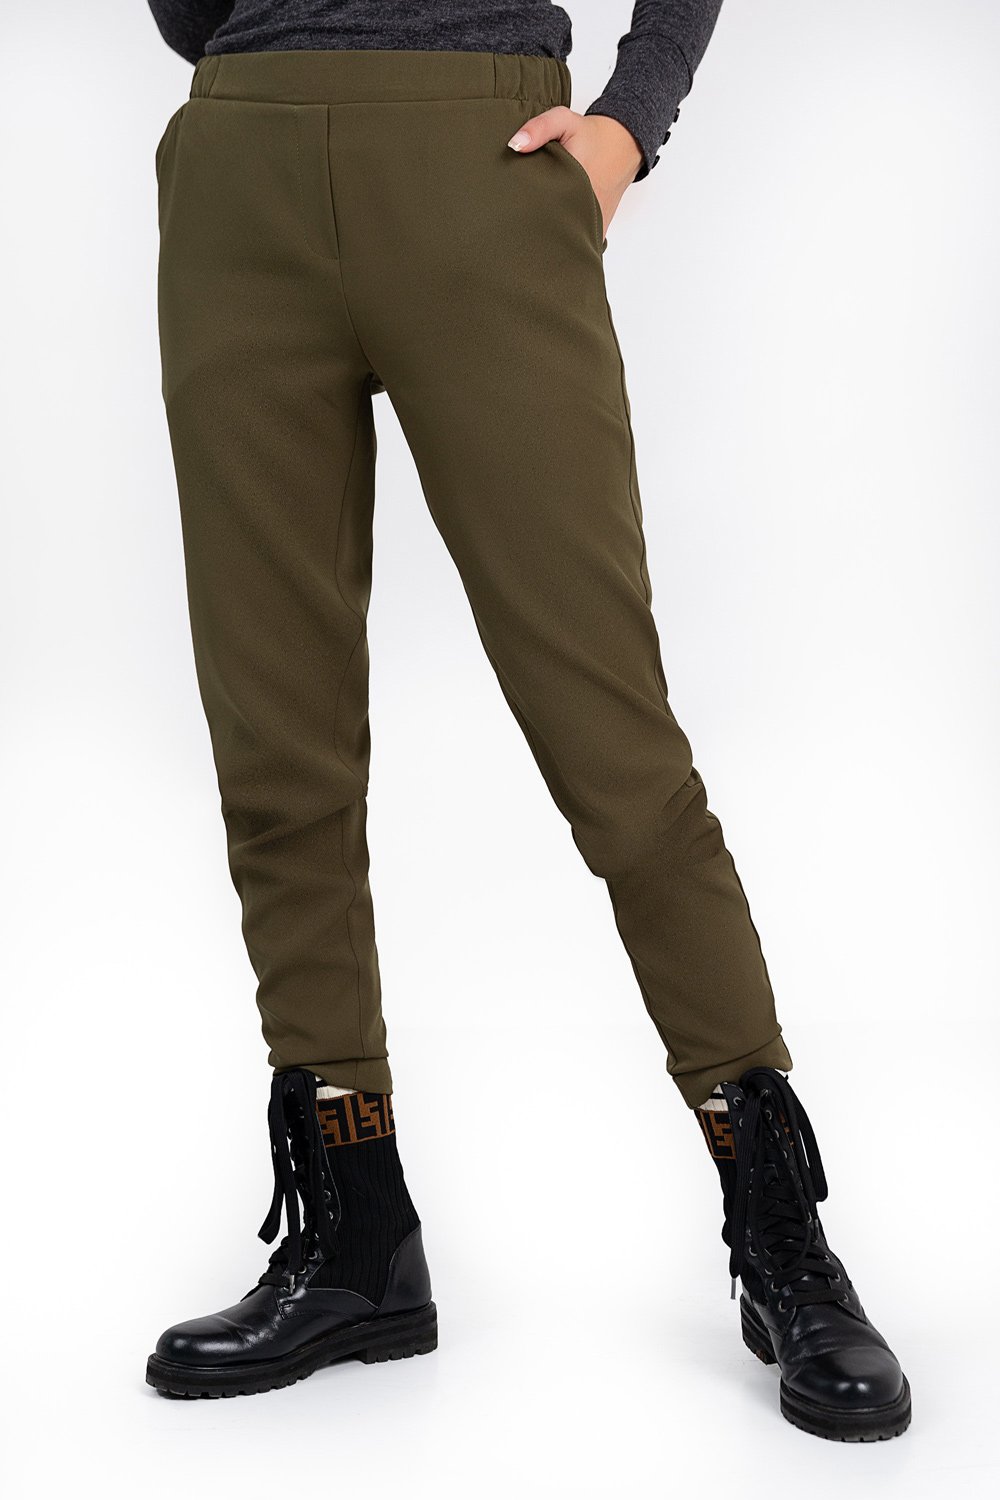 Khaki trousers with elastic